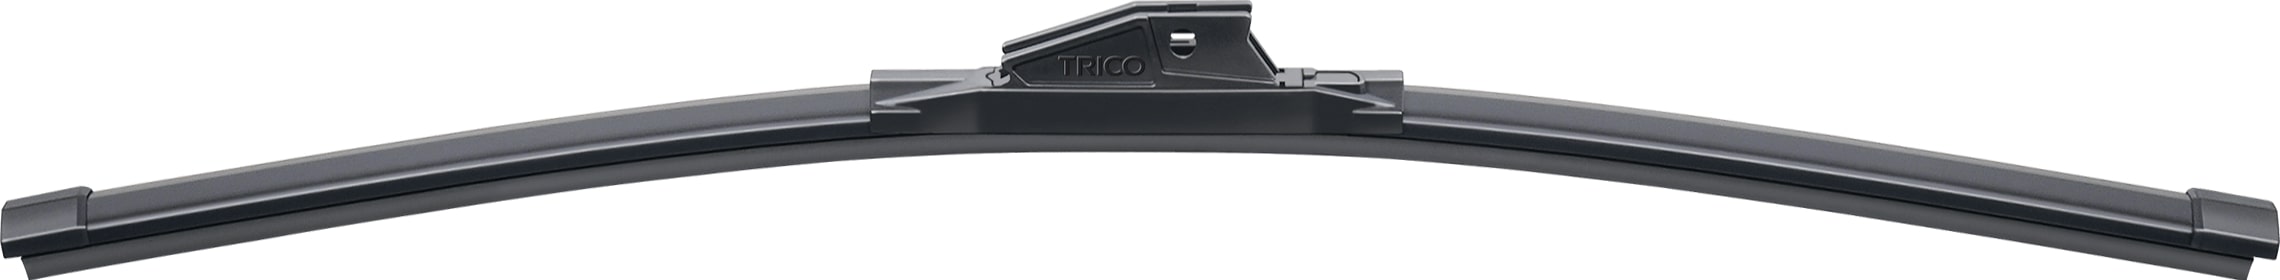 TRICO Wiper Blades - 35 Series ICE 24"